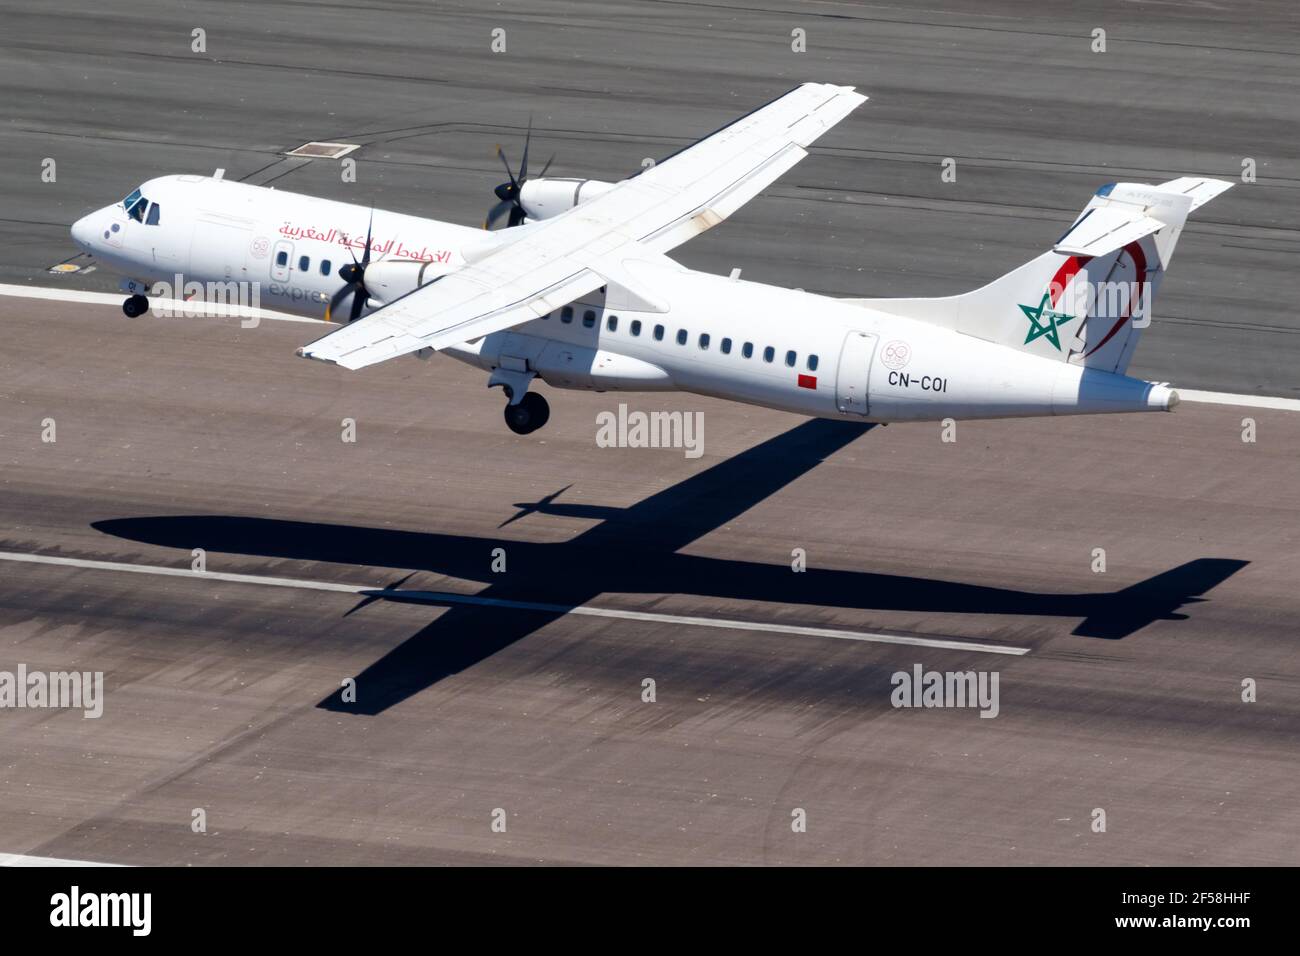 Gibraltar - July 29, 2018: Royal Air Maroc Express ATR 72 airplane at Gibraltar airport. Stock Photo